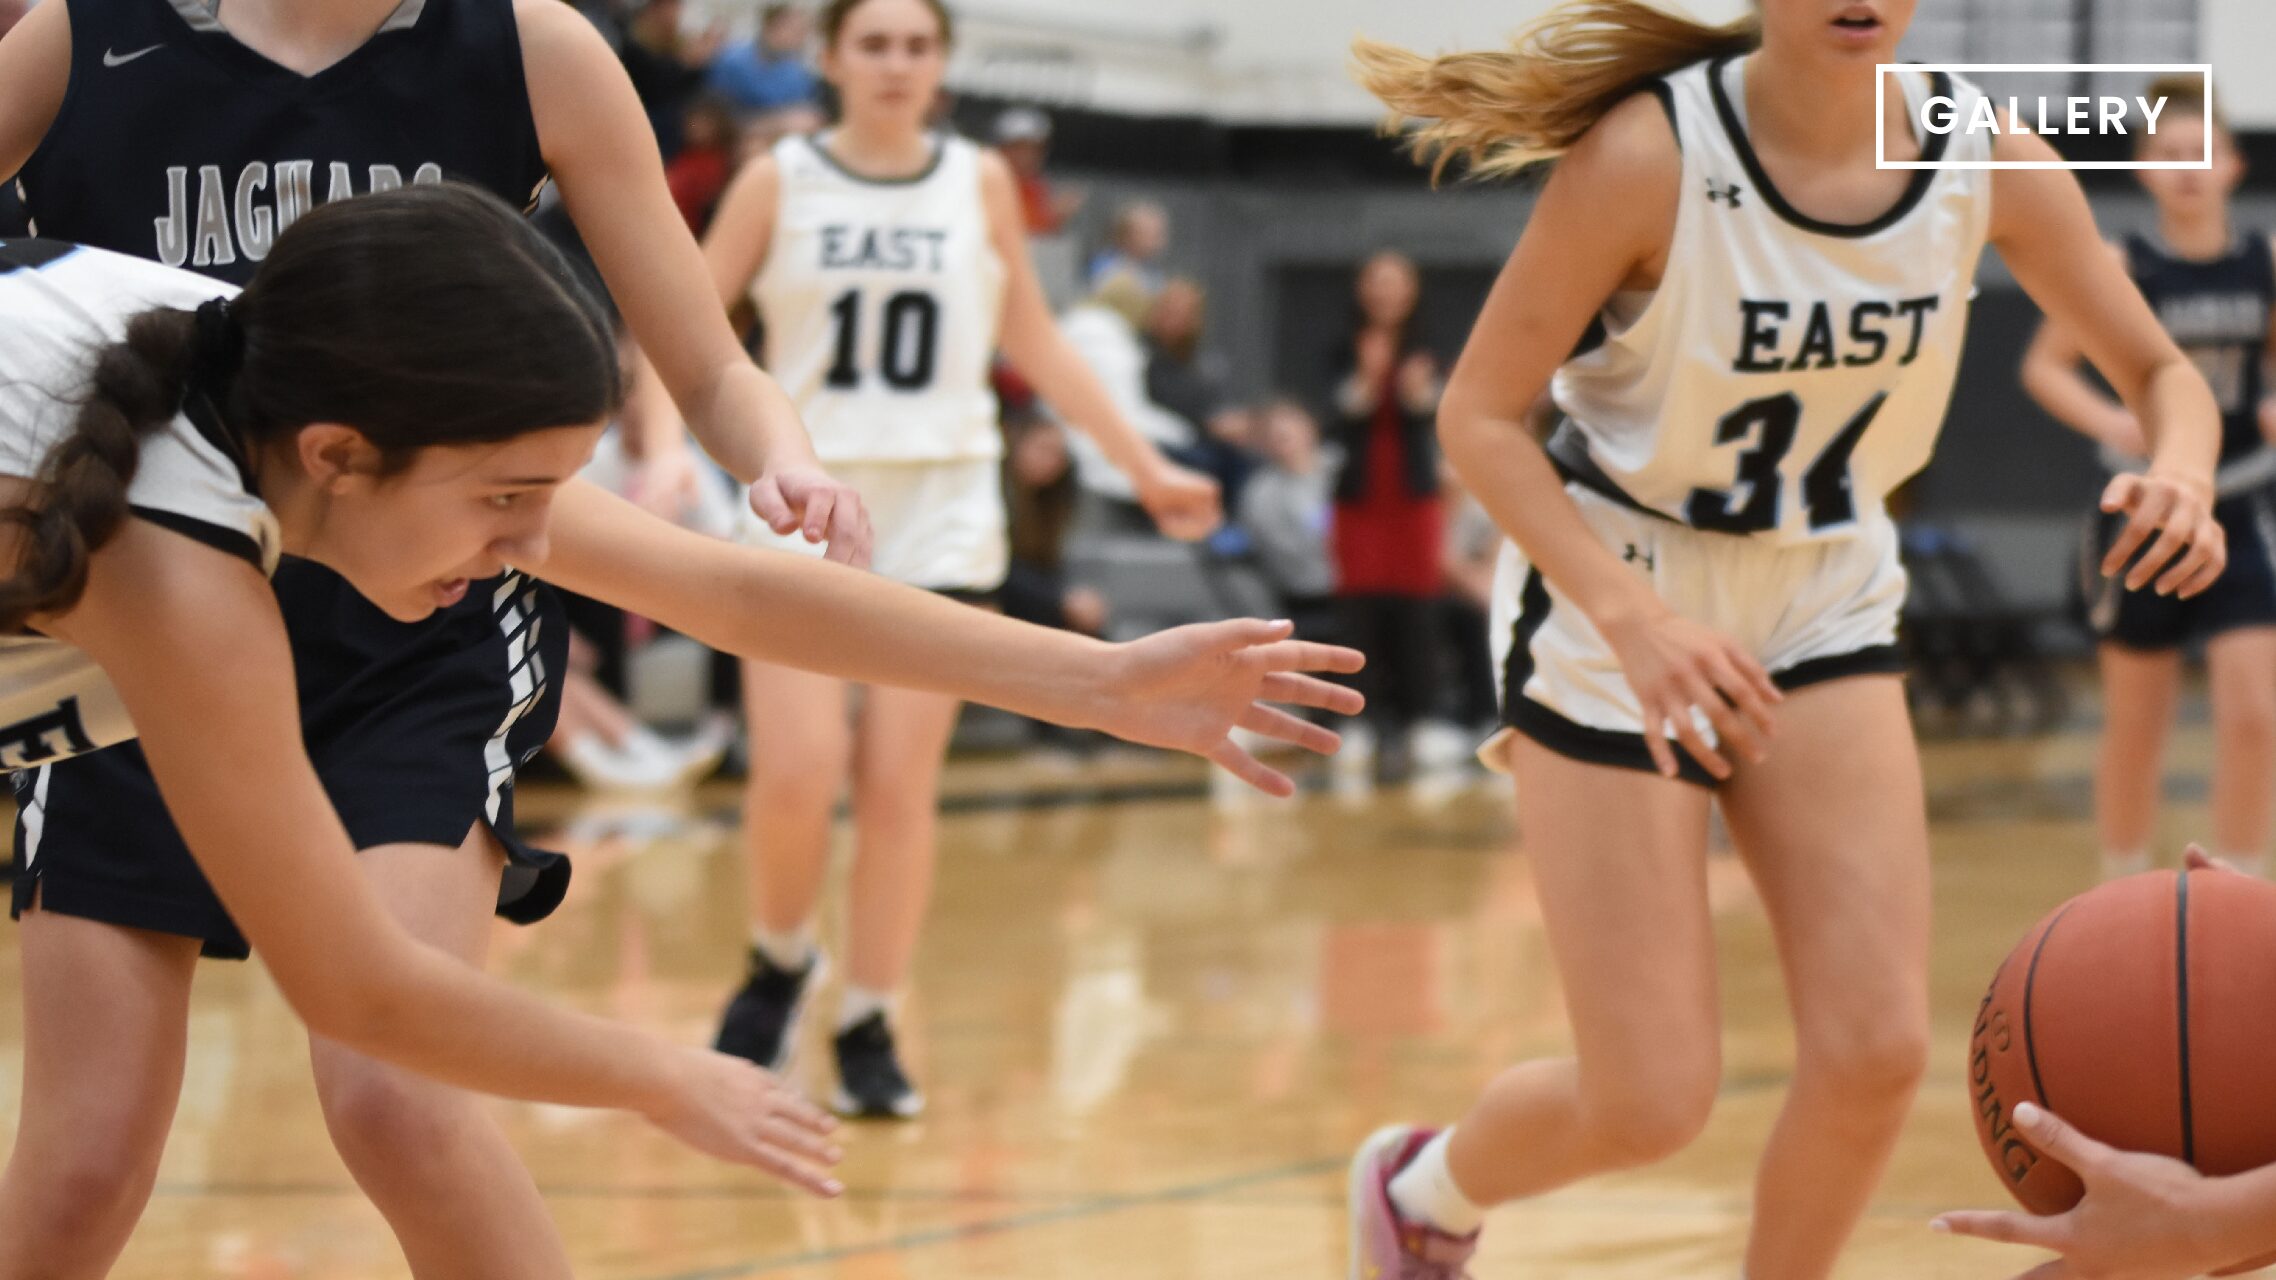 Gallery: Girls JV Basketball Defeats Mill Valley 34-25